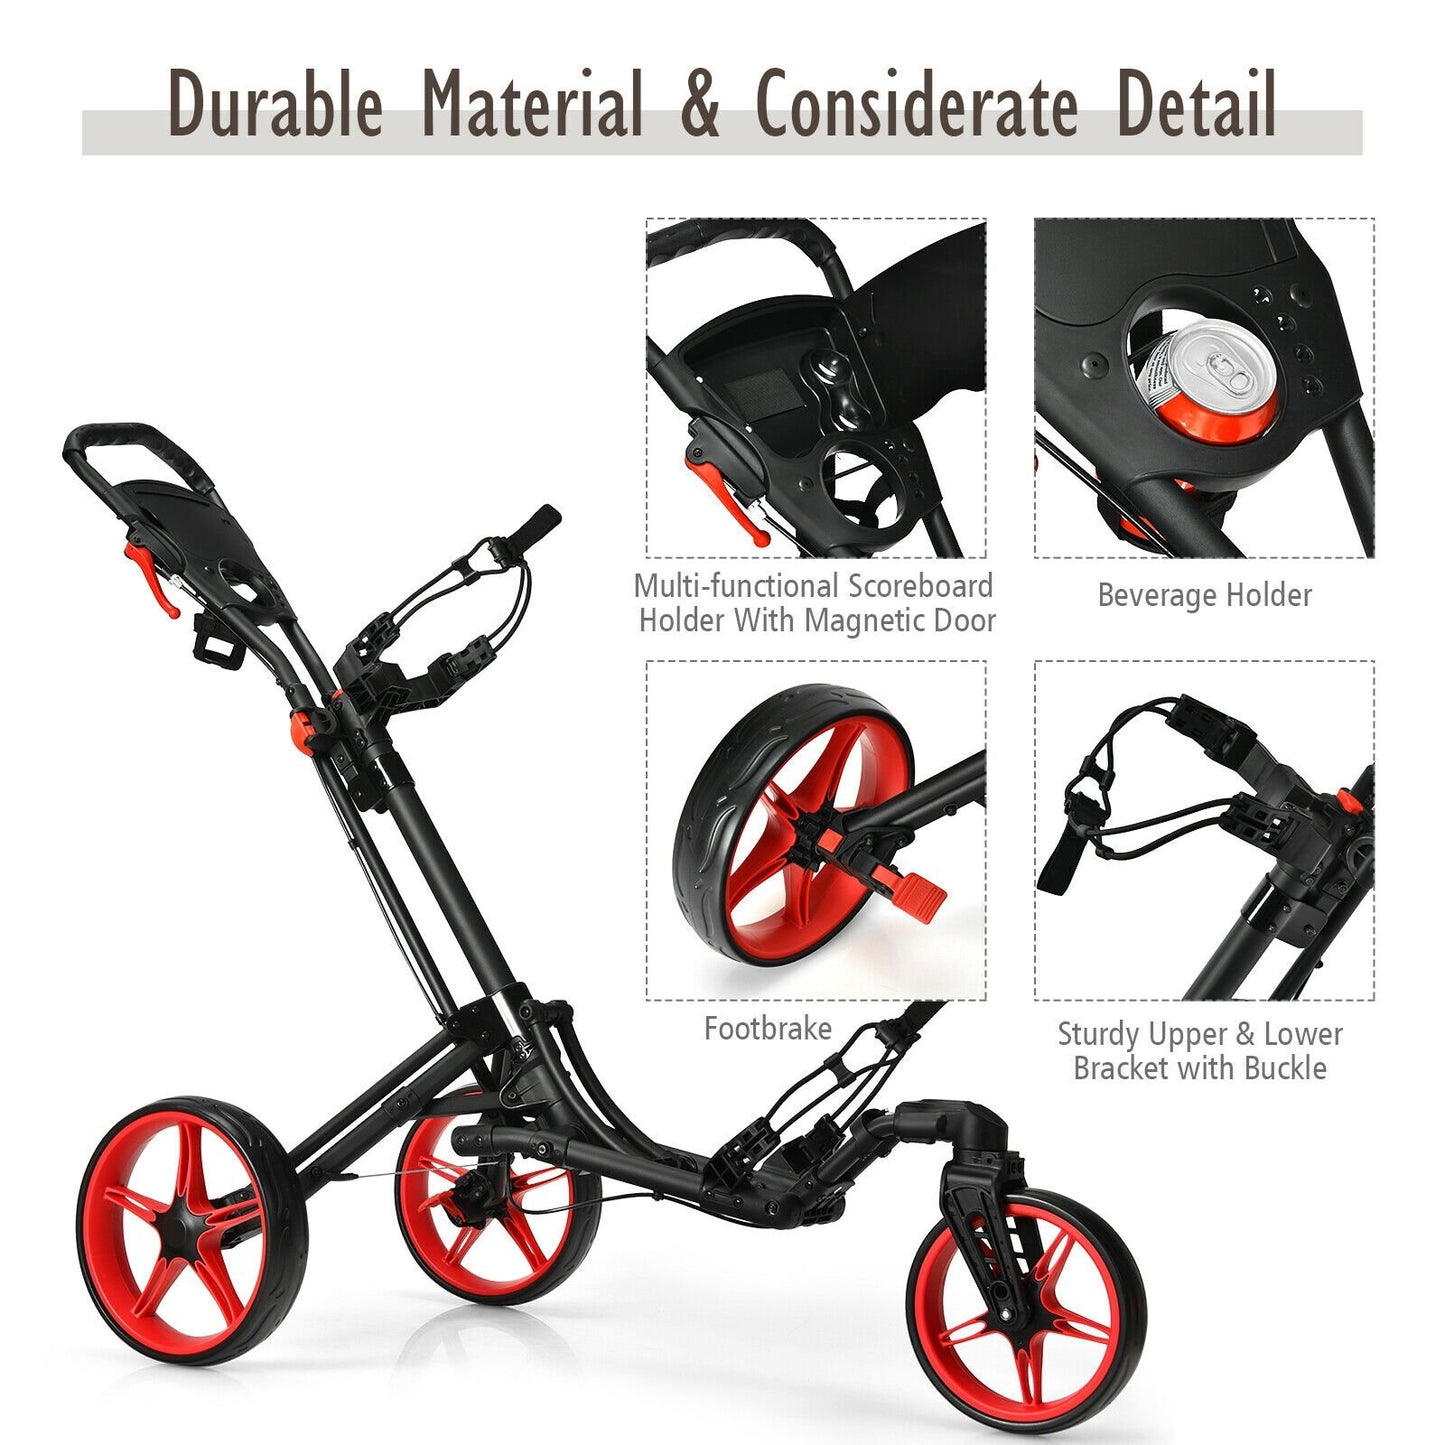 Folding Golf Push Cart with Scoreboard Adjustable Handle Swivel Wheel, Red